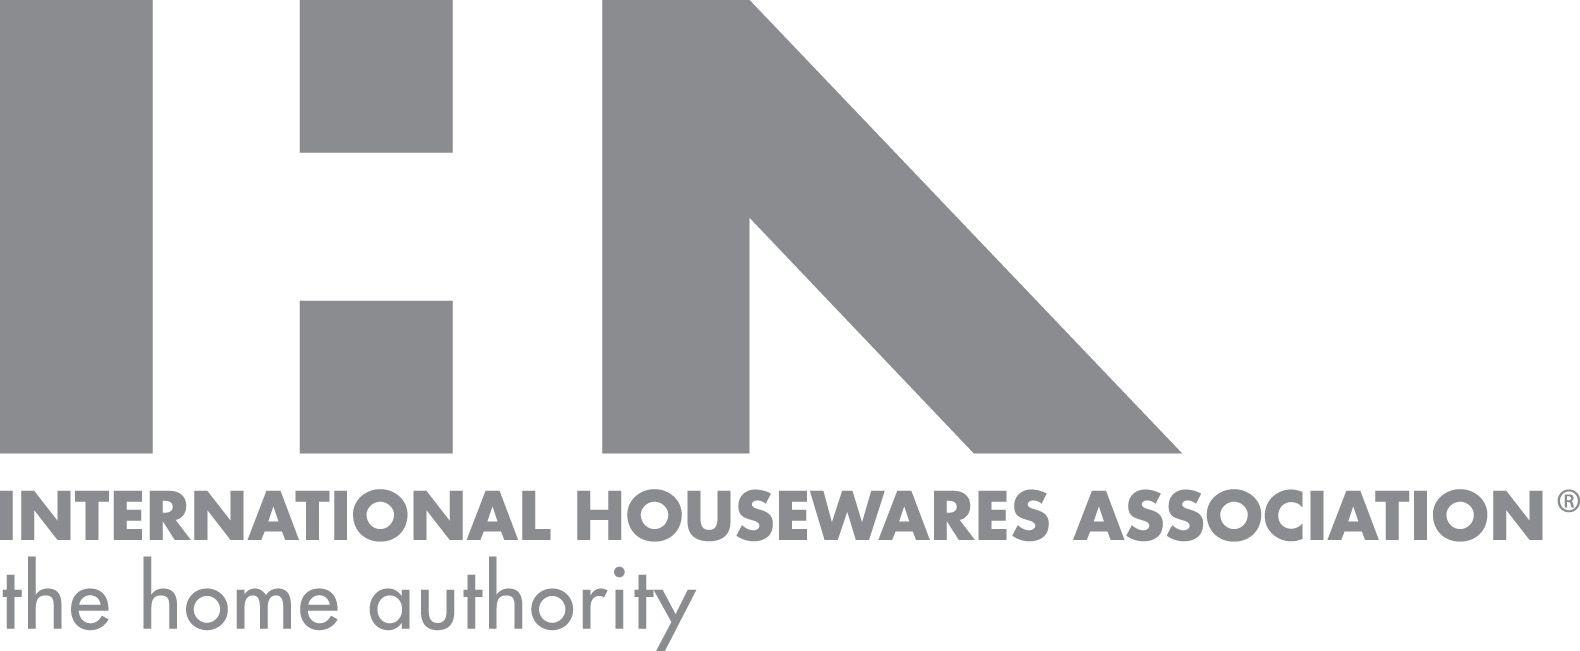 Home Product Logo - Digital Assets - Photos, Logos + Artwork - International Housewares ...